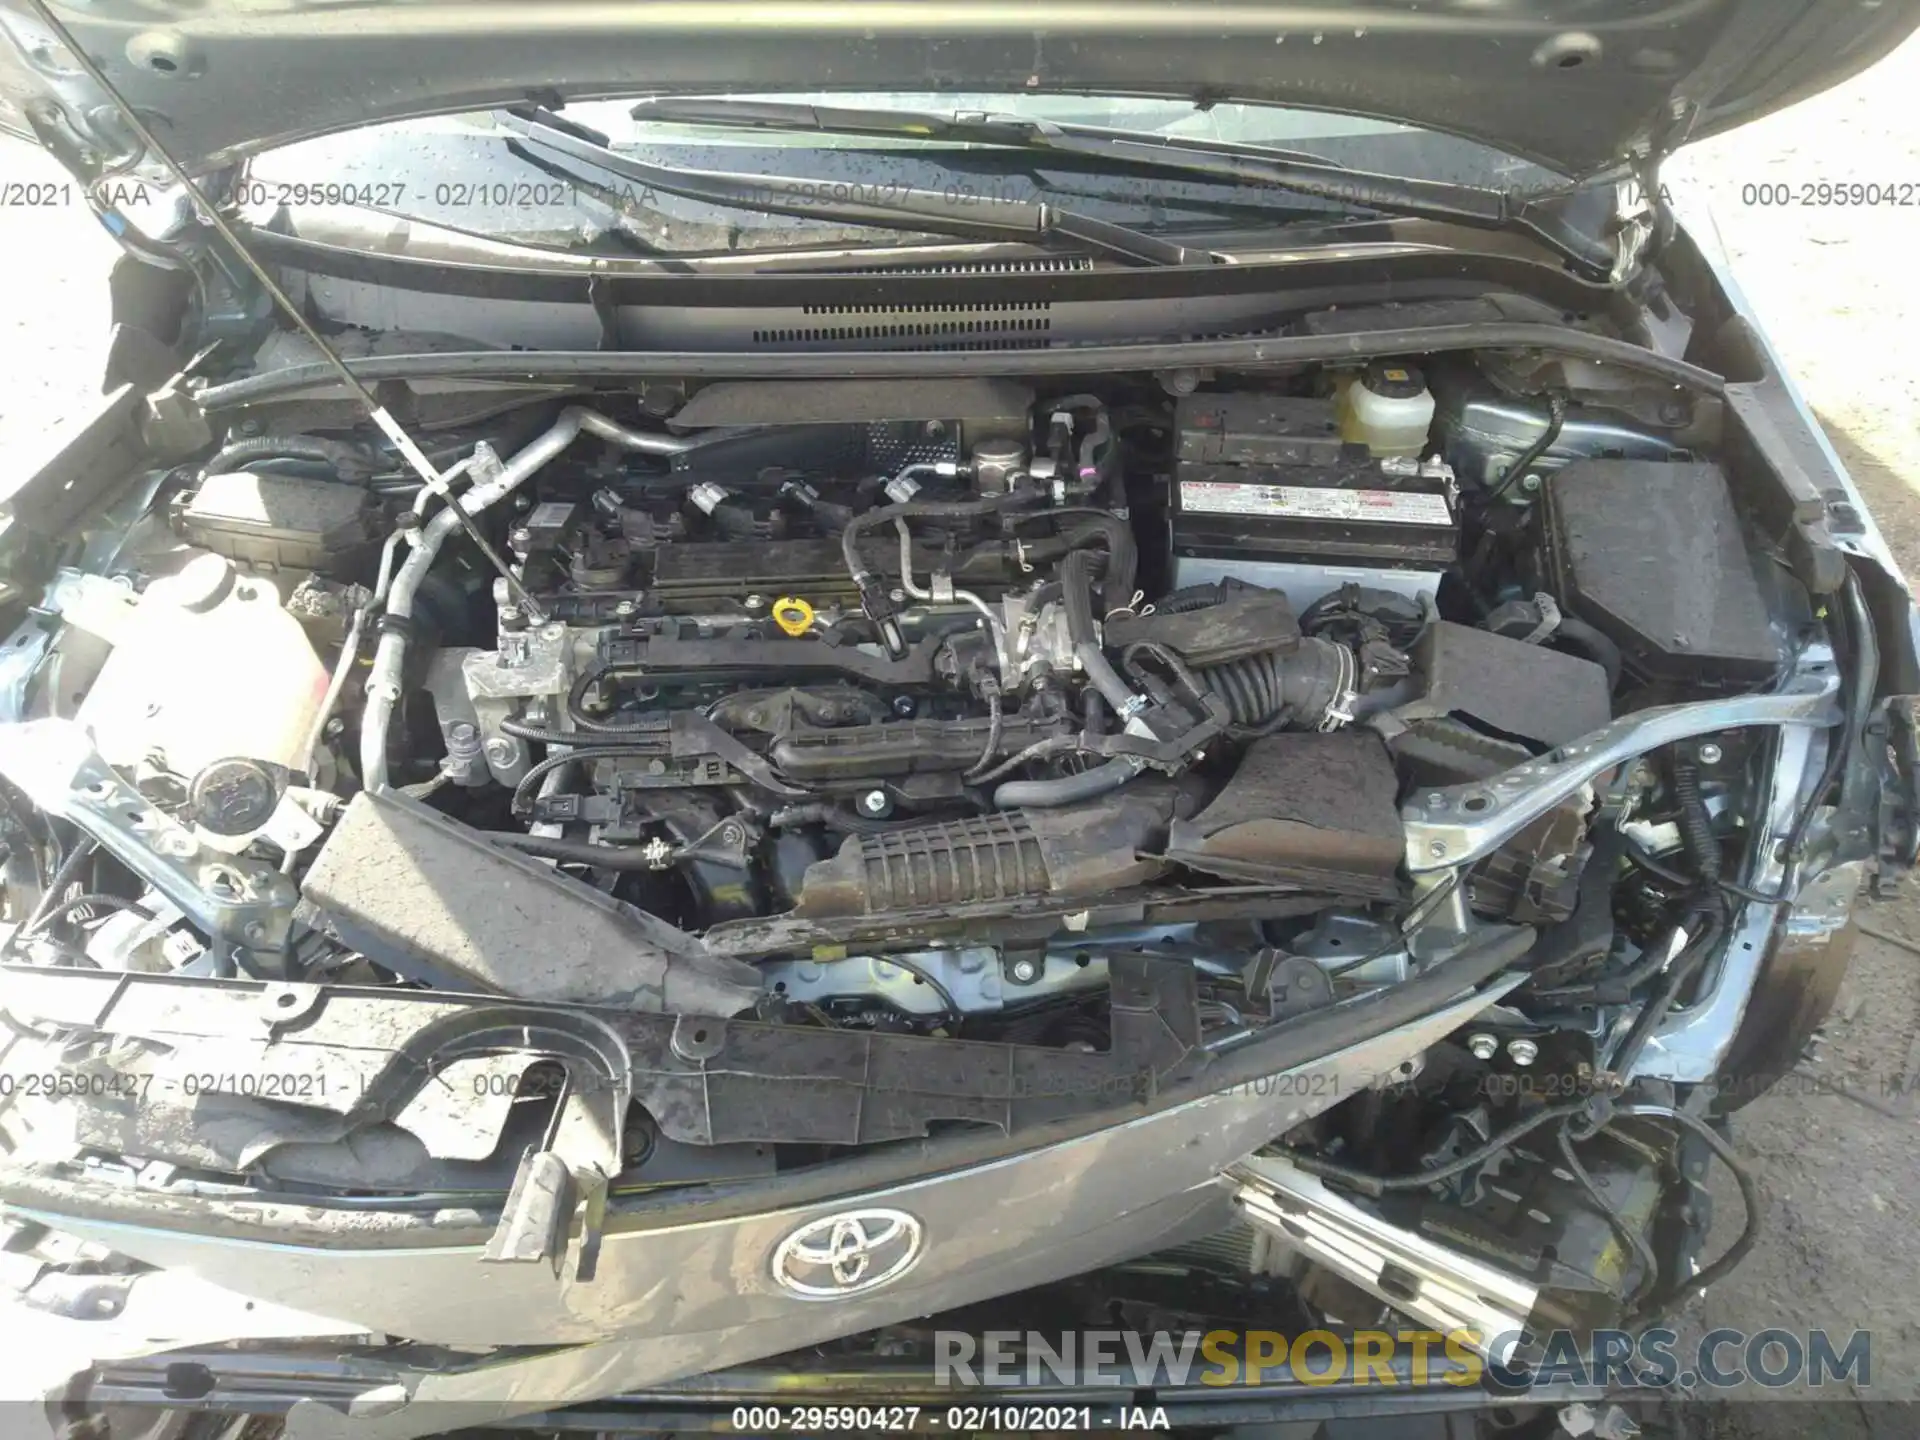 10 Photograph of a damaged car JTDS4RCEXLJ009862 TOYOTA COROLLA 2020